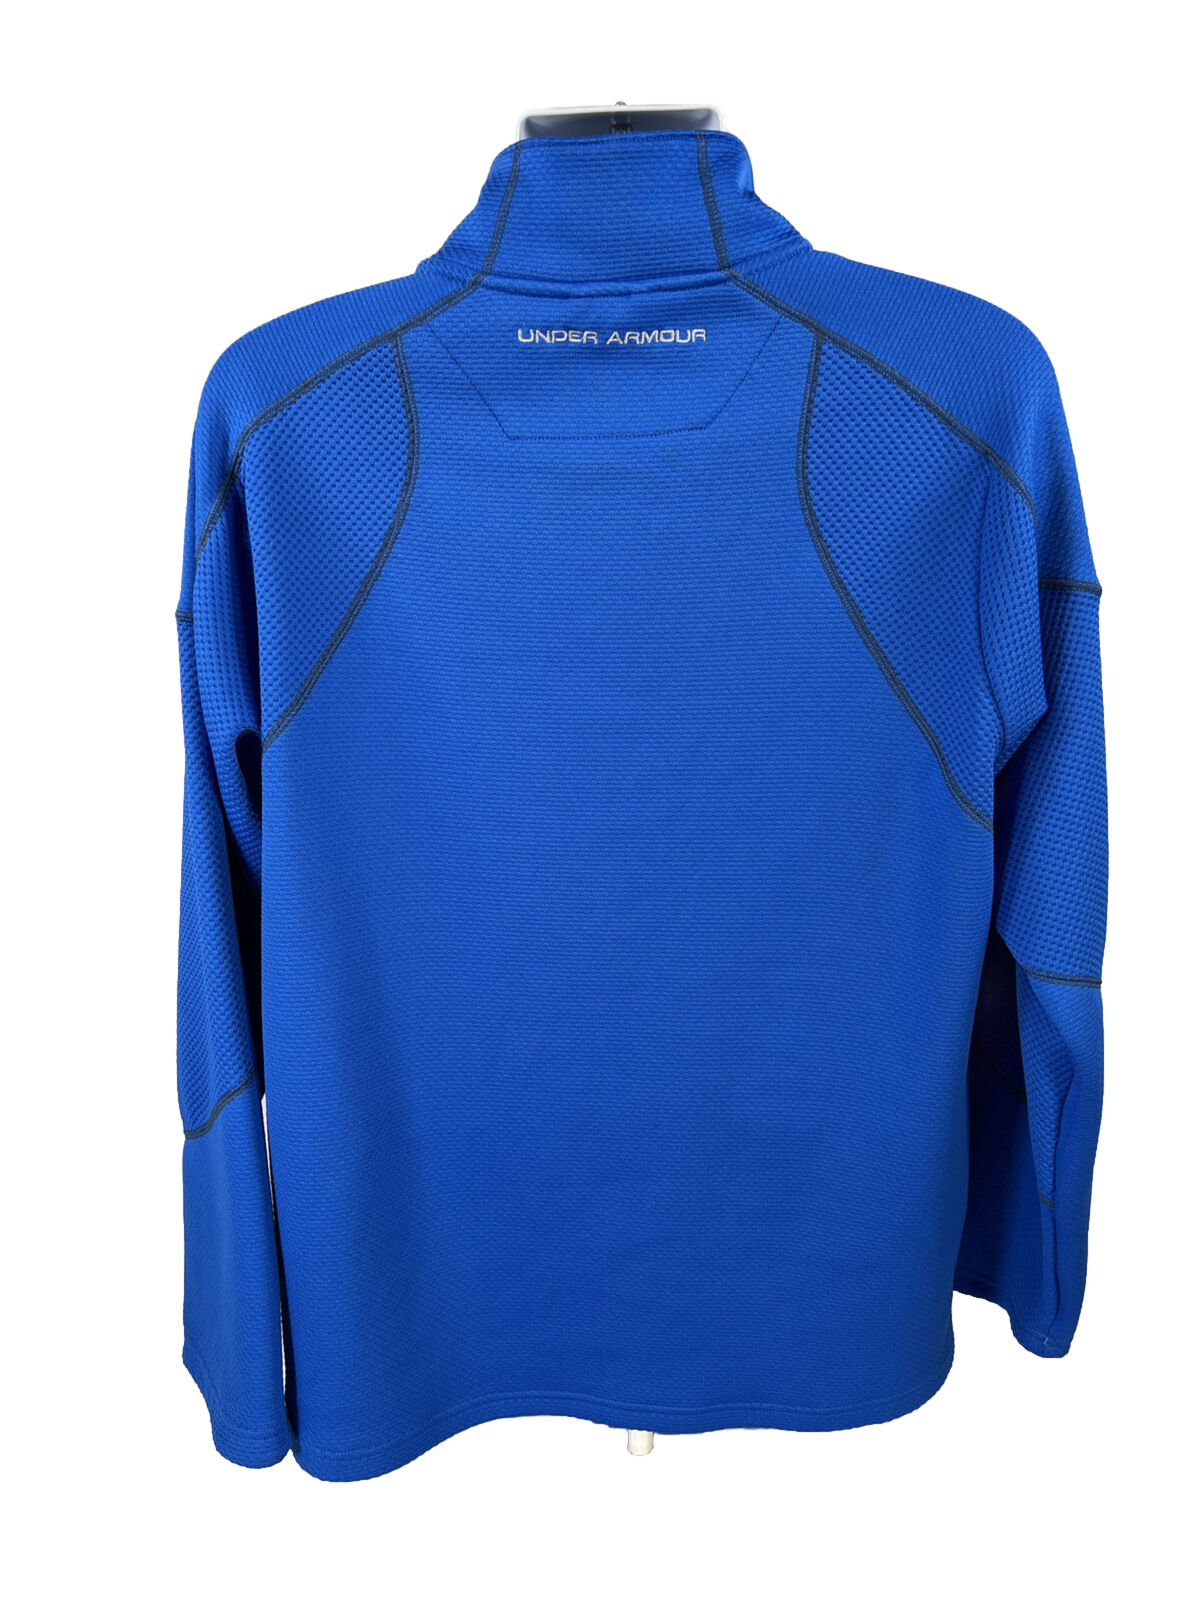 Under Armour Men's Blue Fuego 1/4 Zip Pullover Sweatshirt - XL